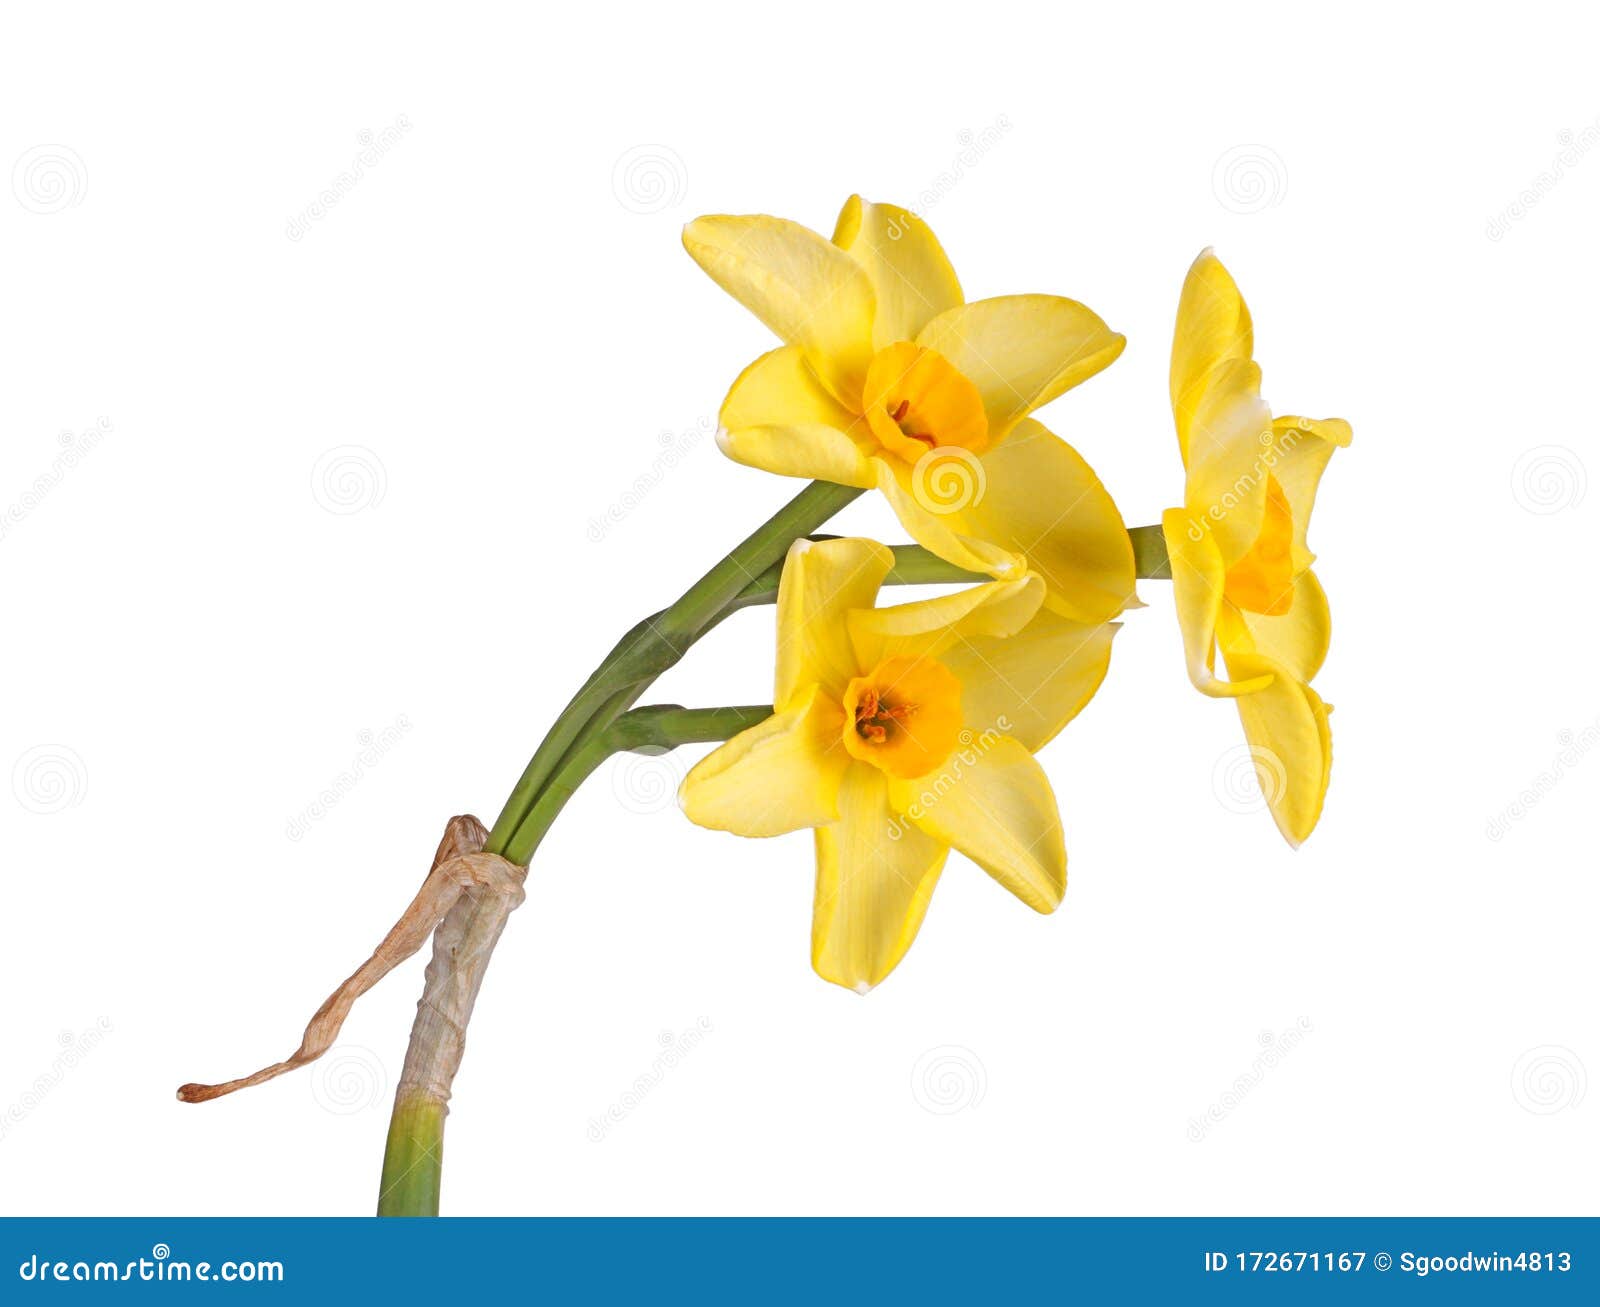 stem with three flowers of a yellow daffodil cultivar 